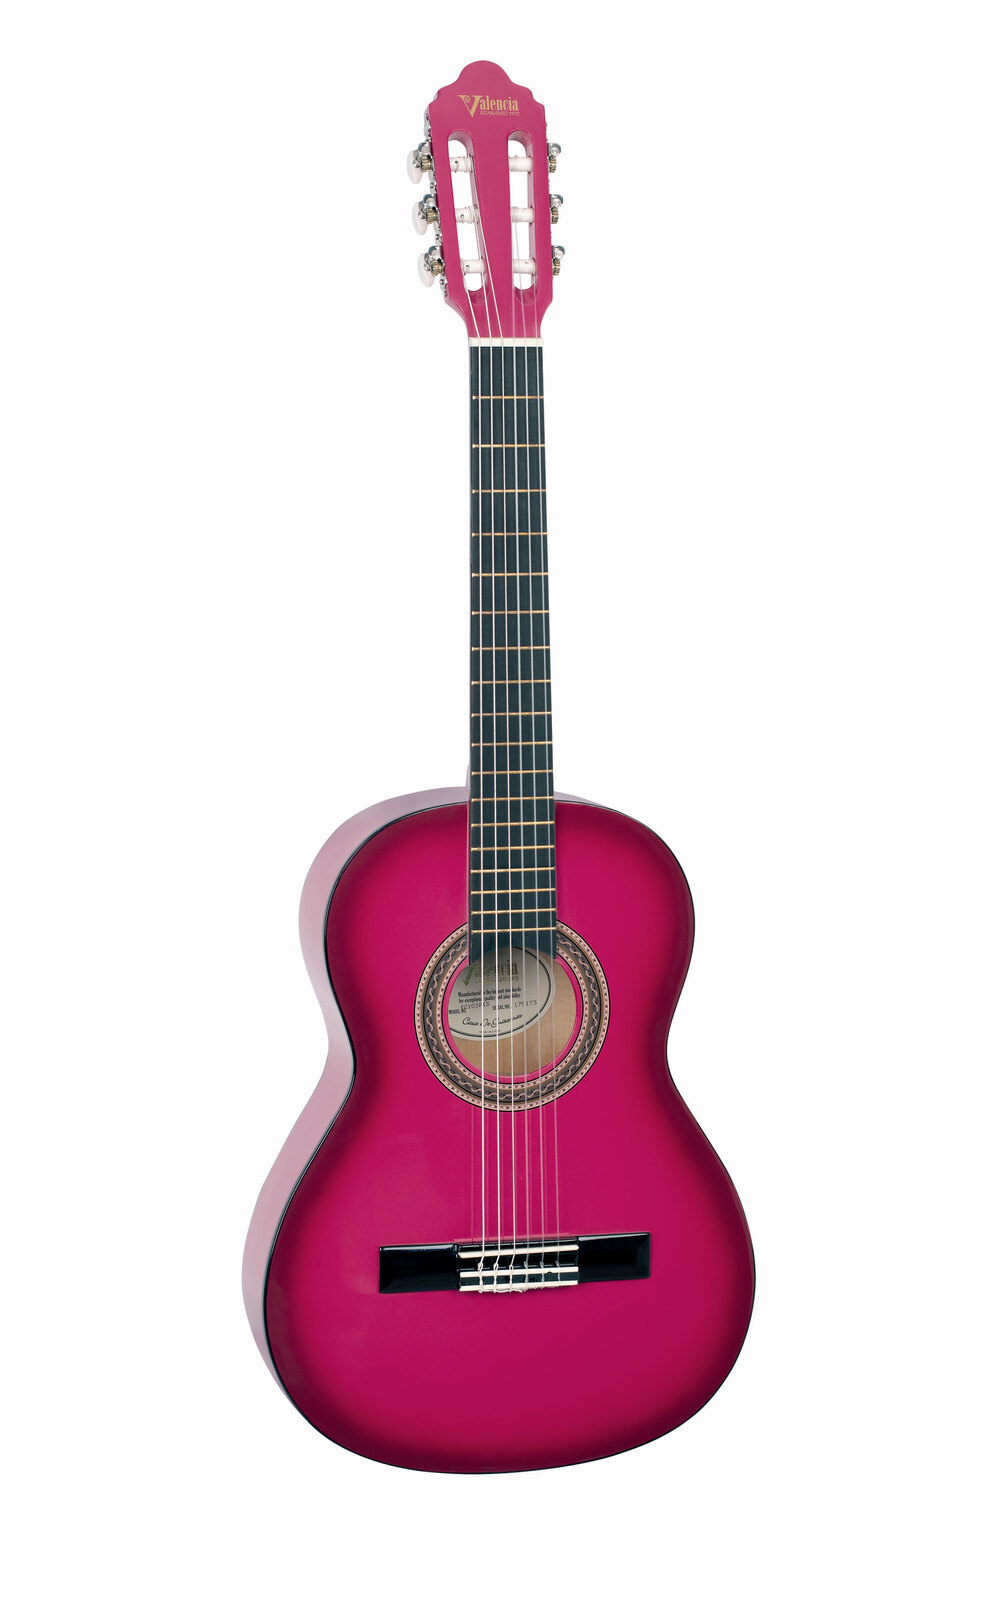 Valencia 100 Series 3/4 Classical Guitar in Pink Burst